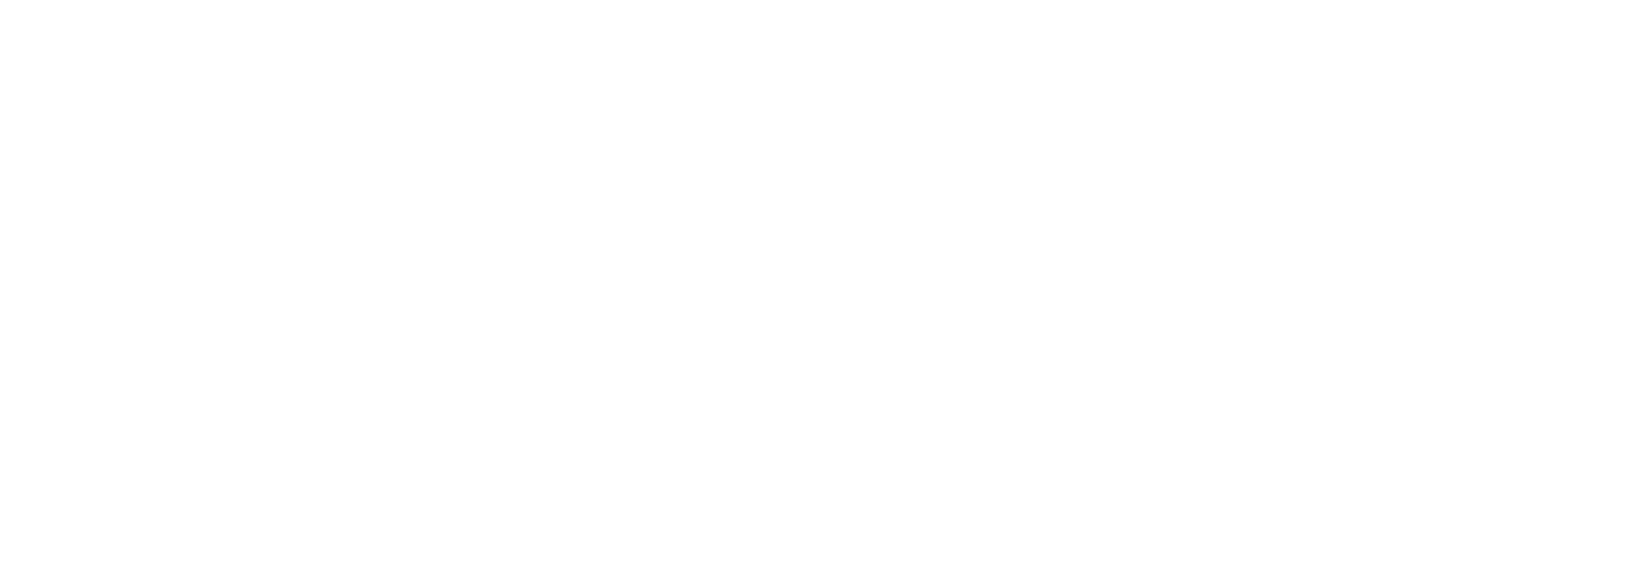 EasyRenz Help Center